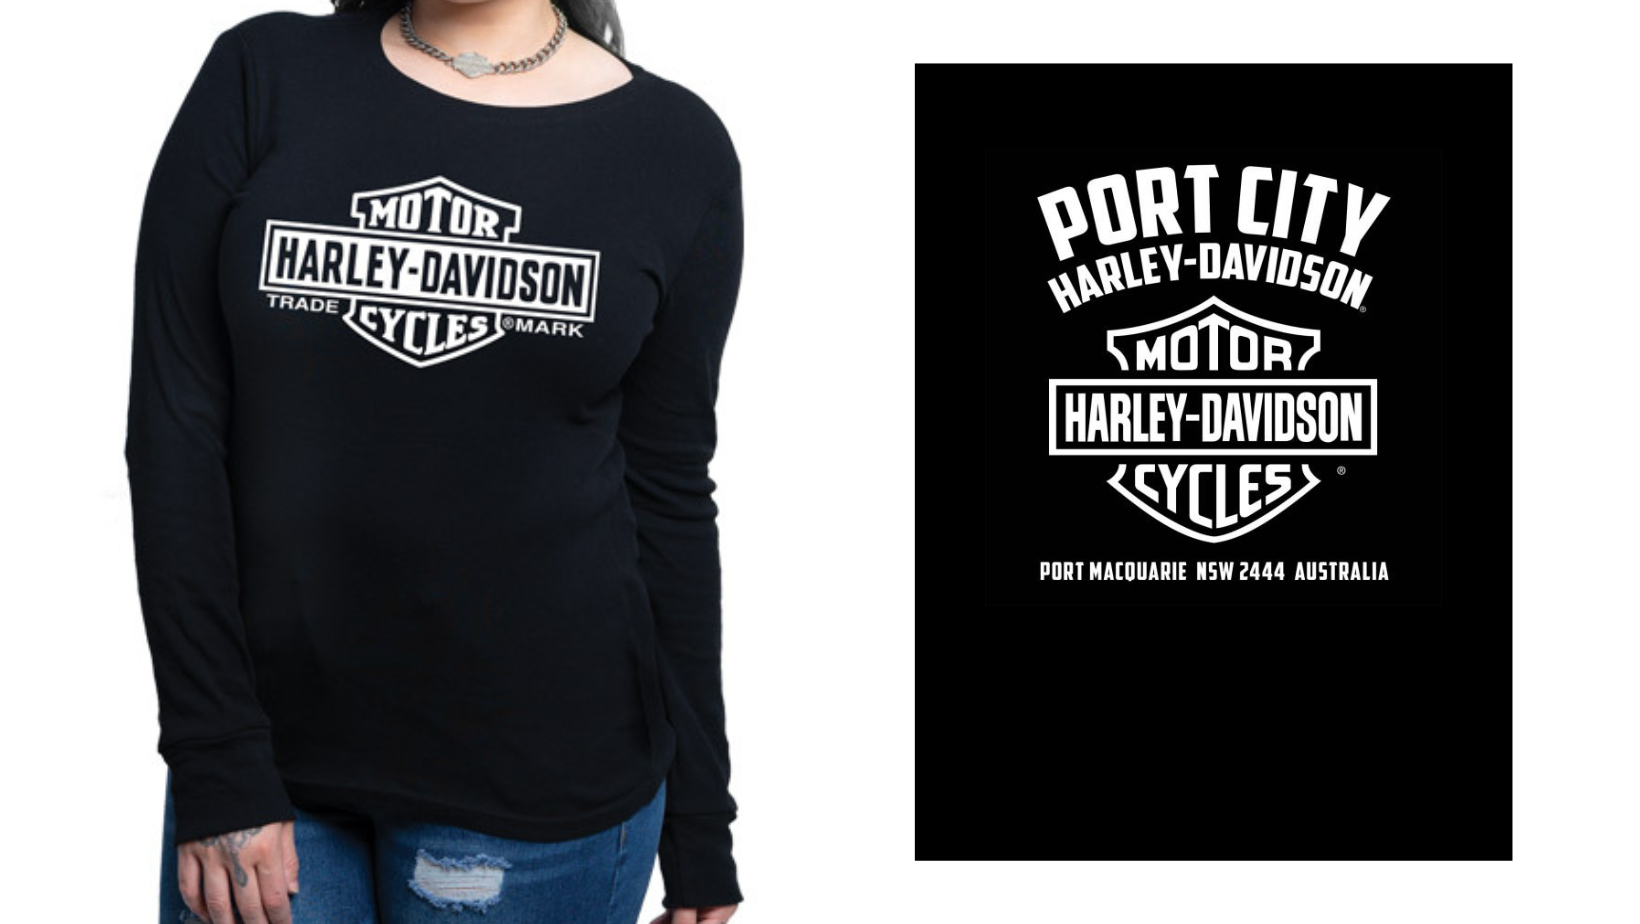 Harley-Davidson X Port City H-D Women's Elongated Bar & Shield Long Sleeve T-Shirt, 40290942. (Back)